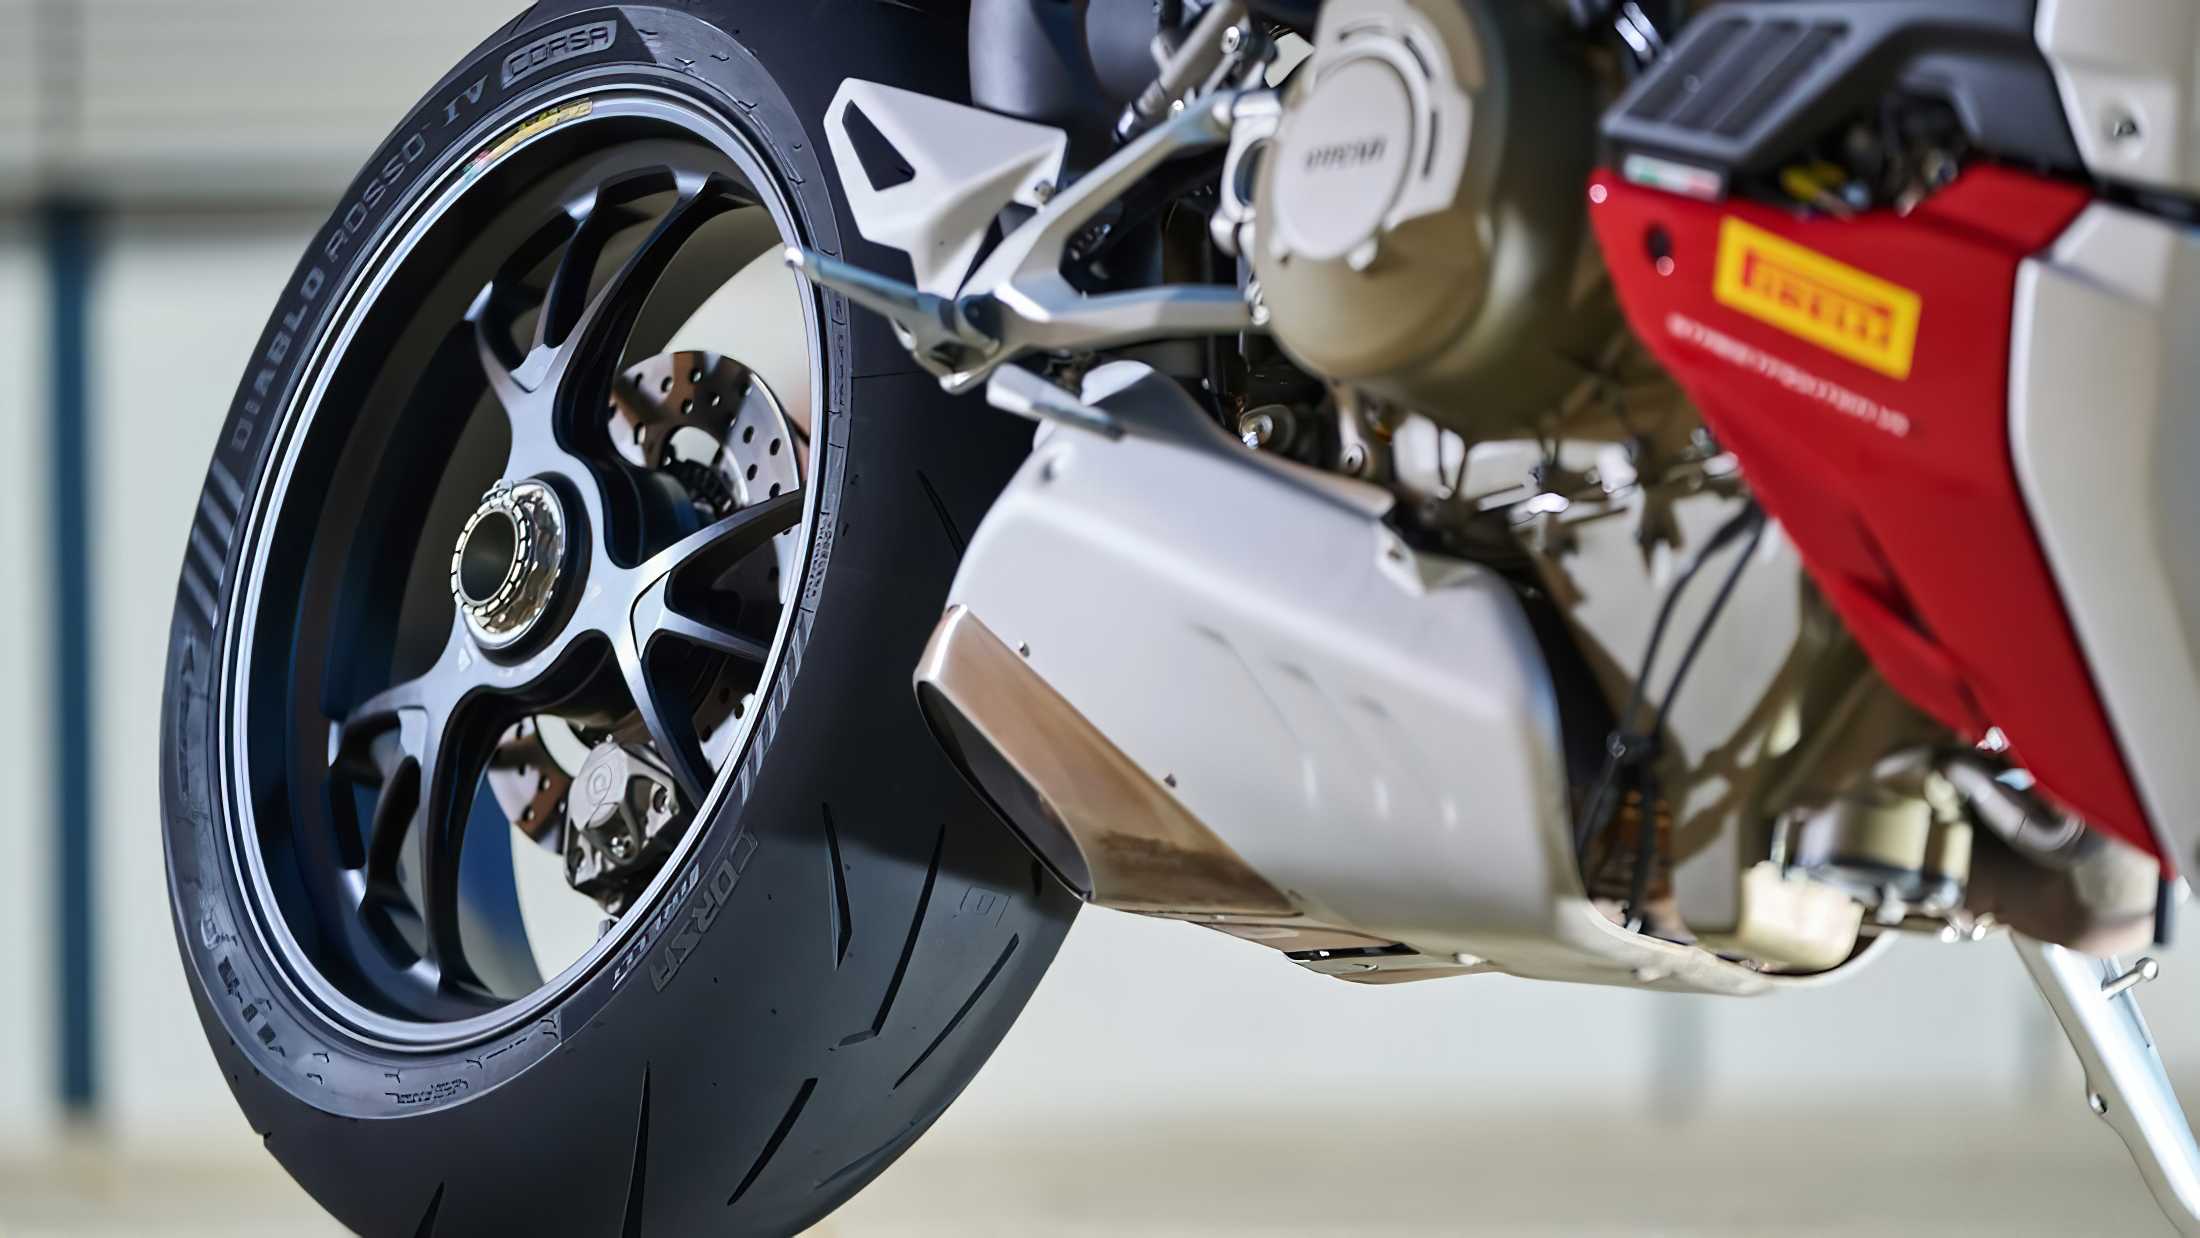 Pirelli Diablo Rosso IV Corsa
- also in the MOTORCYCLES.NEWS APP via @motorradnachrichten